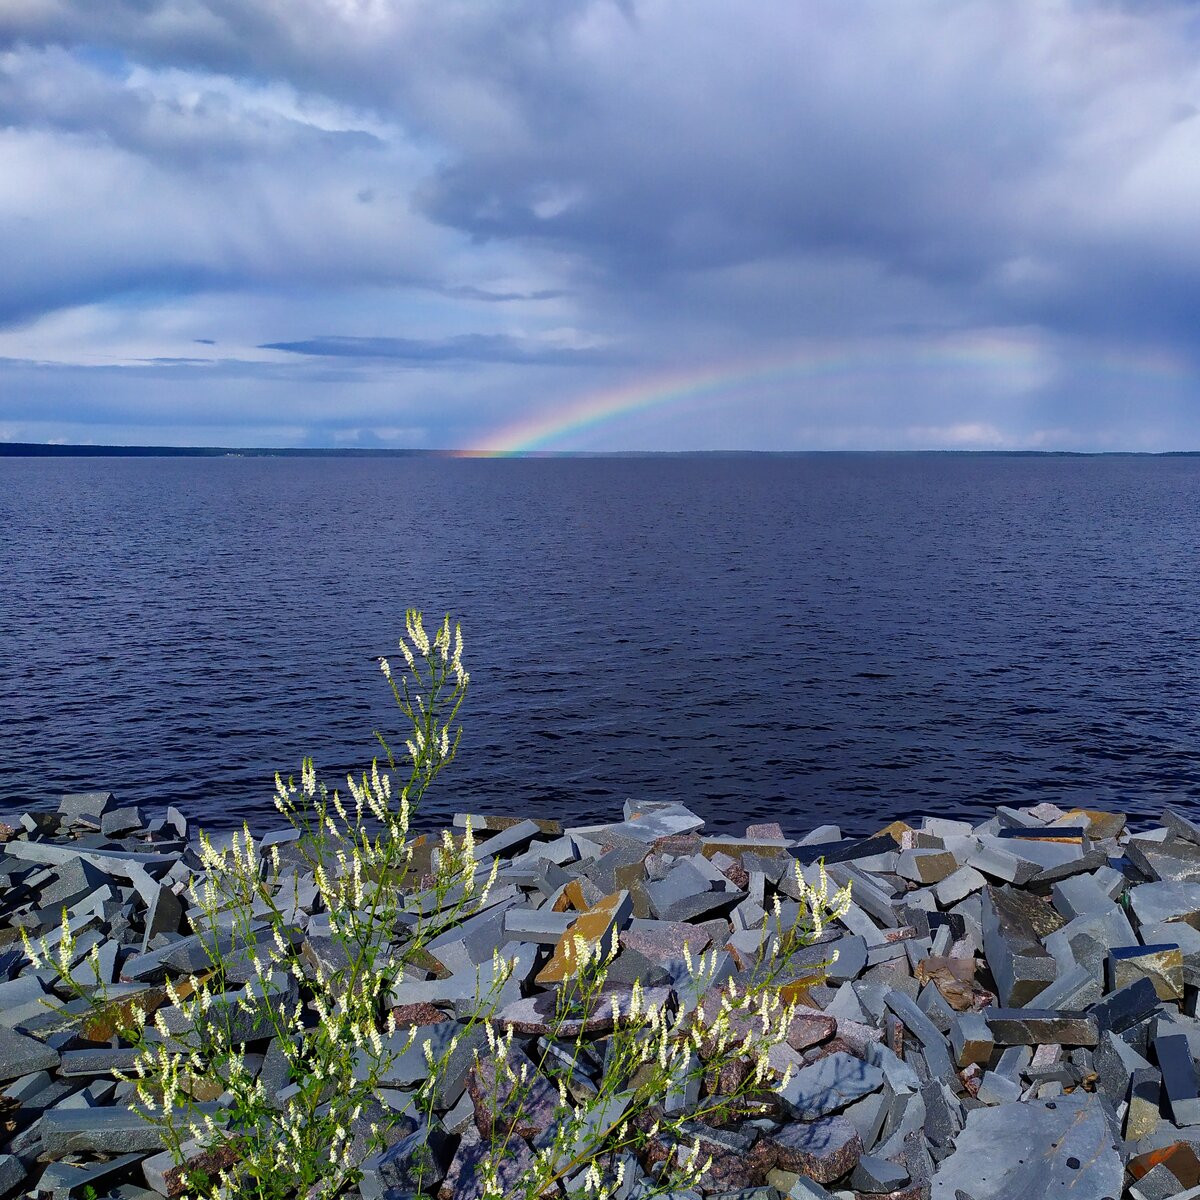 Название онежского озера. Онежское озеро Петрозаводск. Онего озеро в Петрозаводске. Онежское озеро Свирь. Онега озеро.